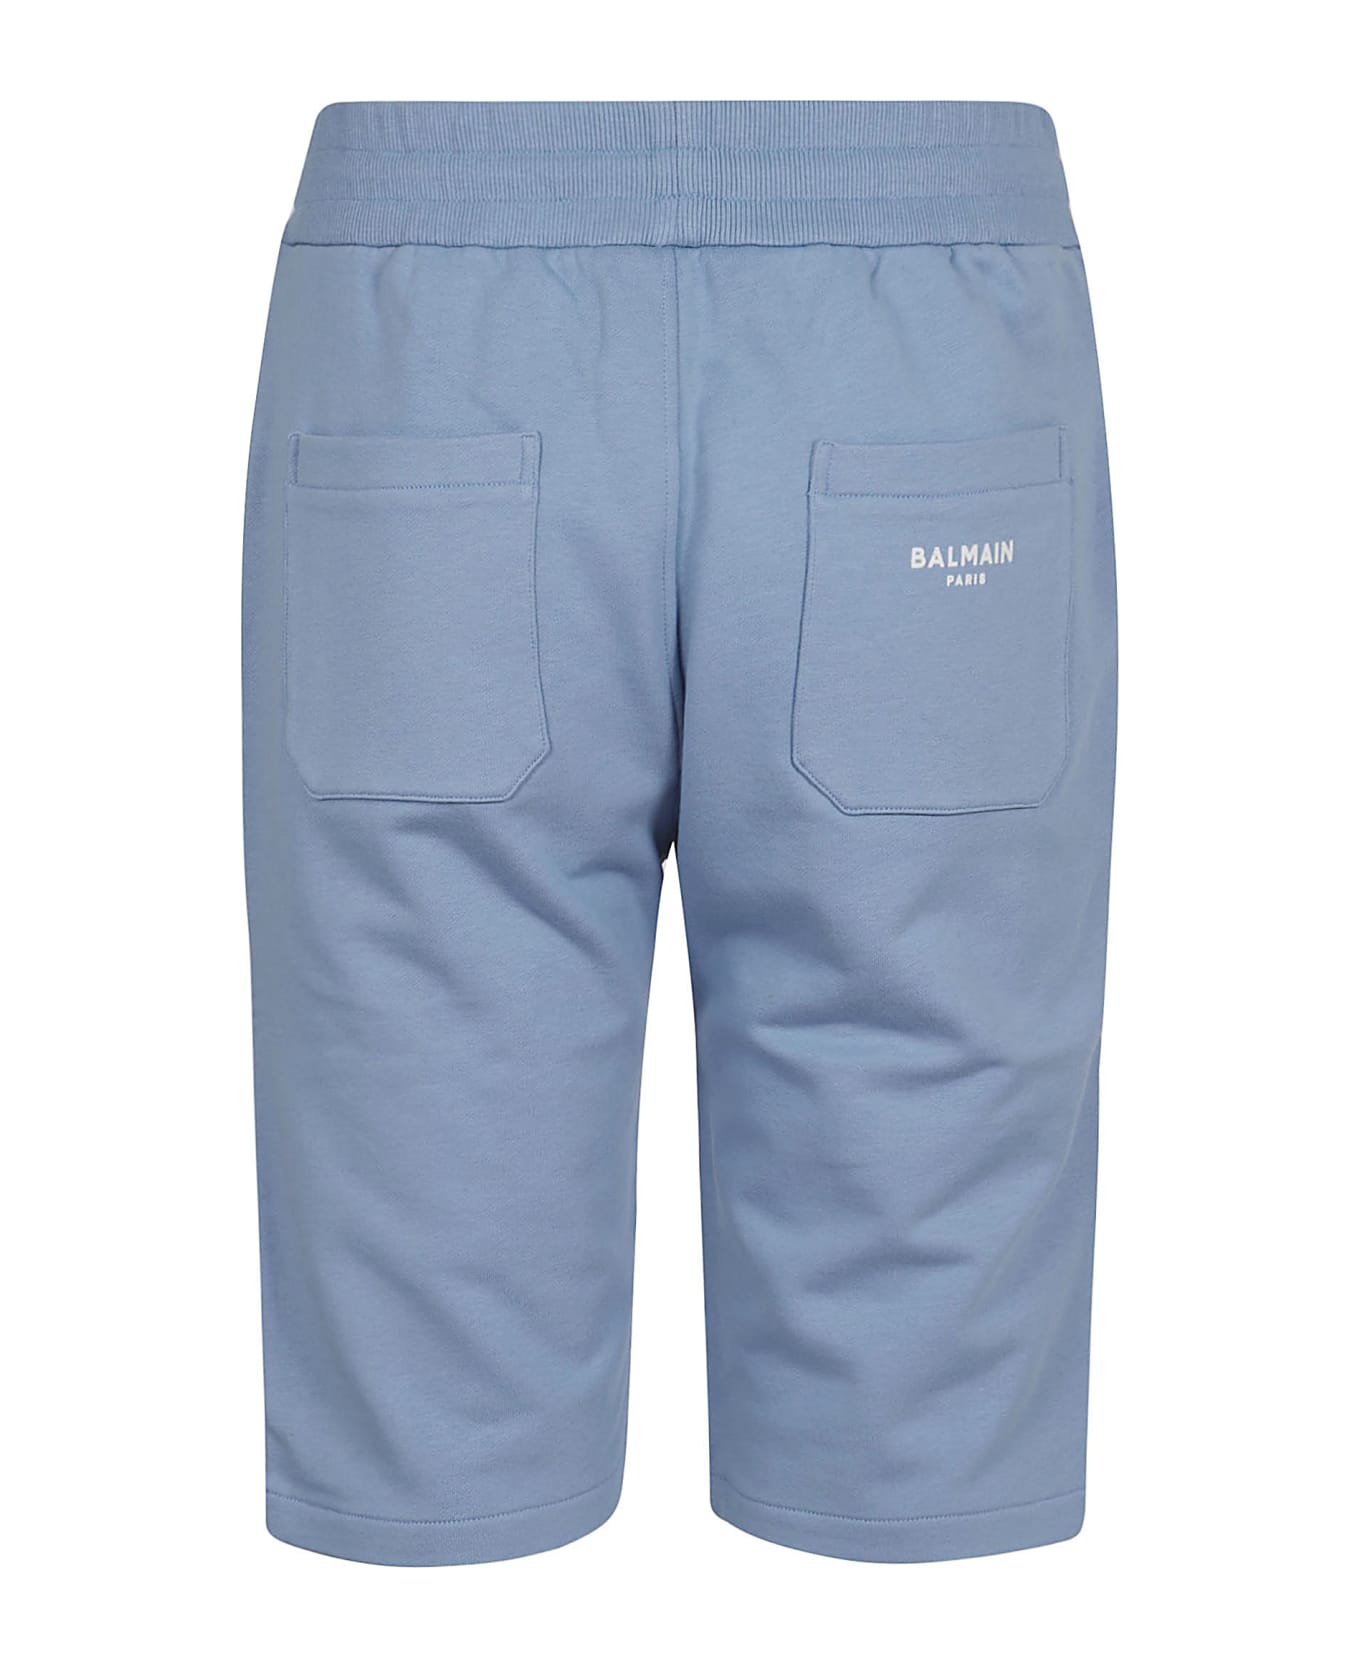 Balmain Flock Bermuda Shorts - Slf Bleu Pale Naturel ショートパンツ